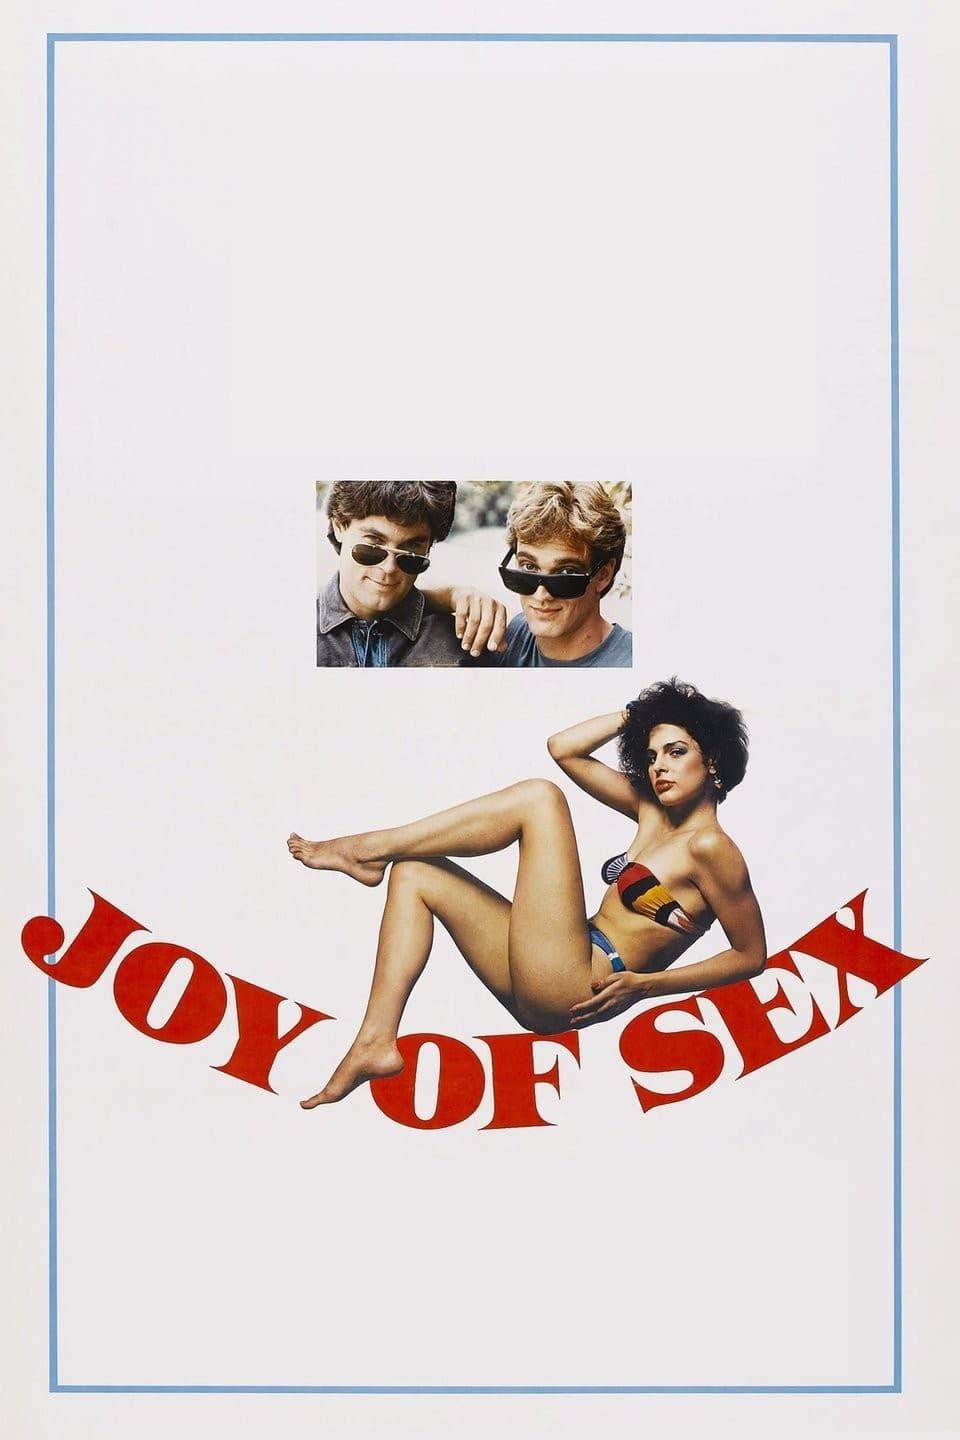 Joy of Sex poster